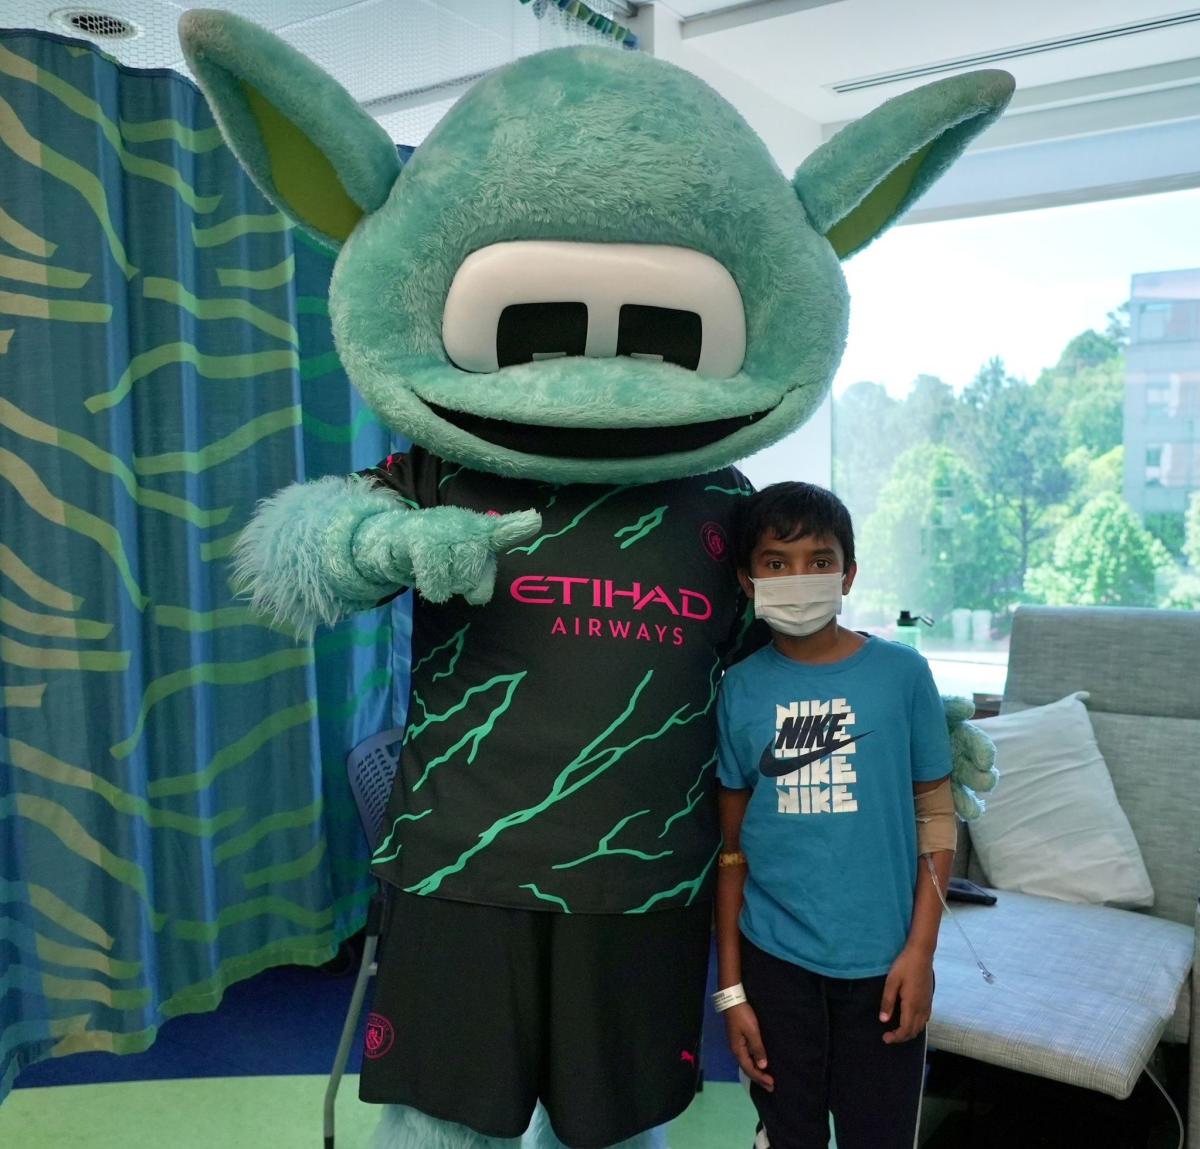 Man City Mascot, Moonchester, Visiting UNC Childrens Hospital